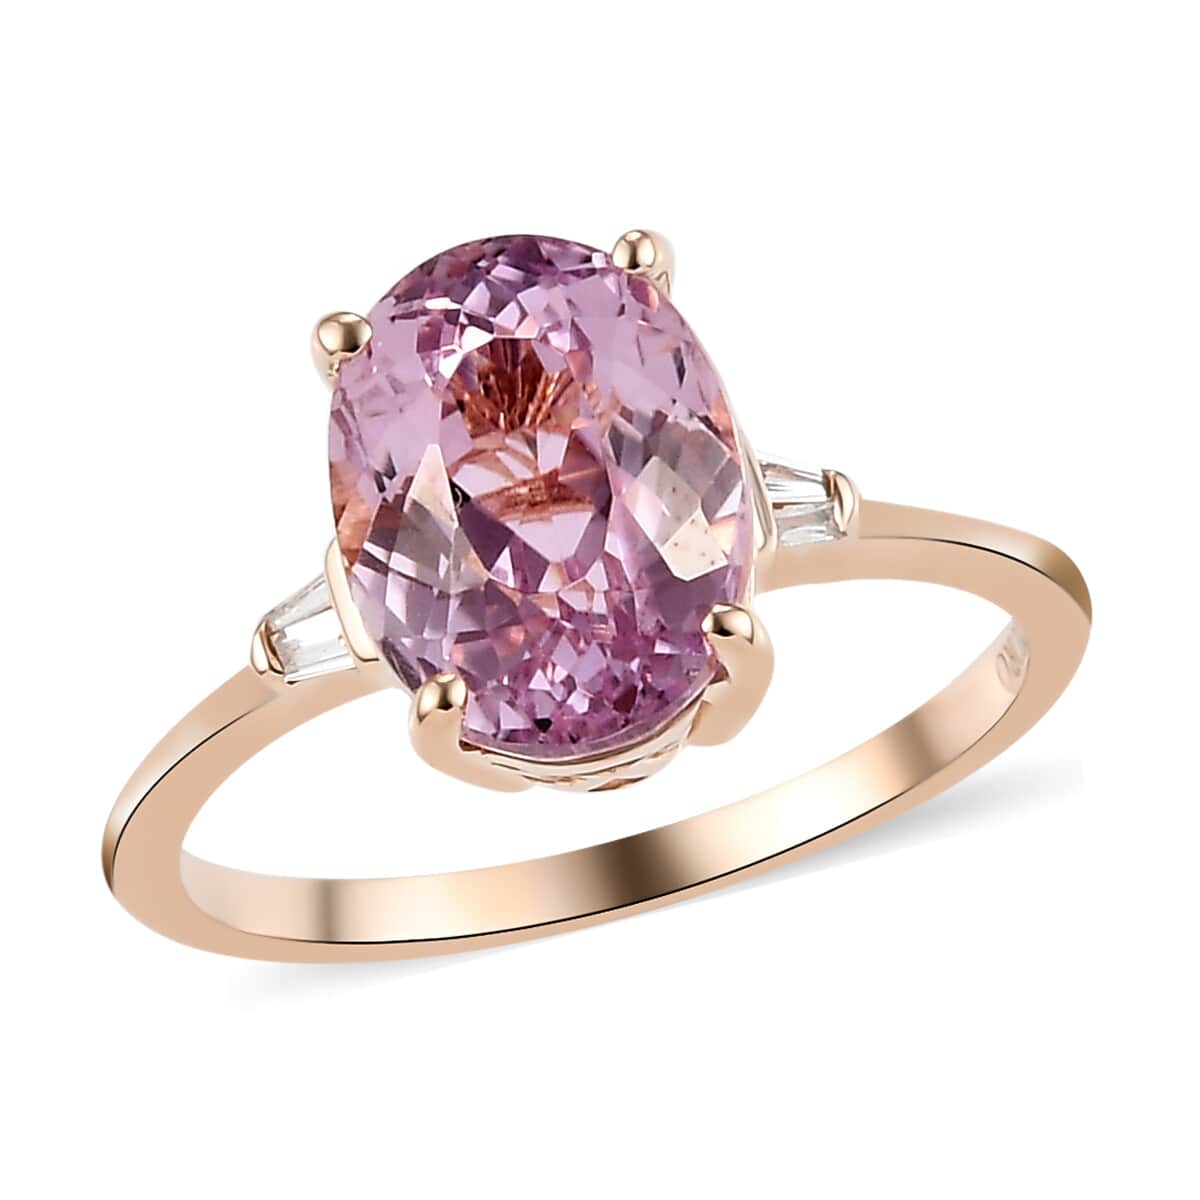 LUXORO 10K Rose Gold Premium Kunzite and Diamond Accent Ring (Size 9.0) 2 Grams 3.60 ctw image number 0